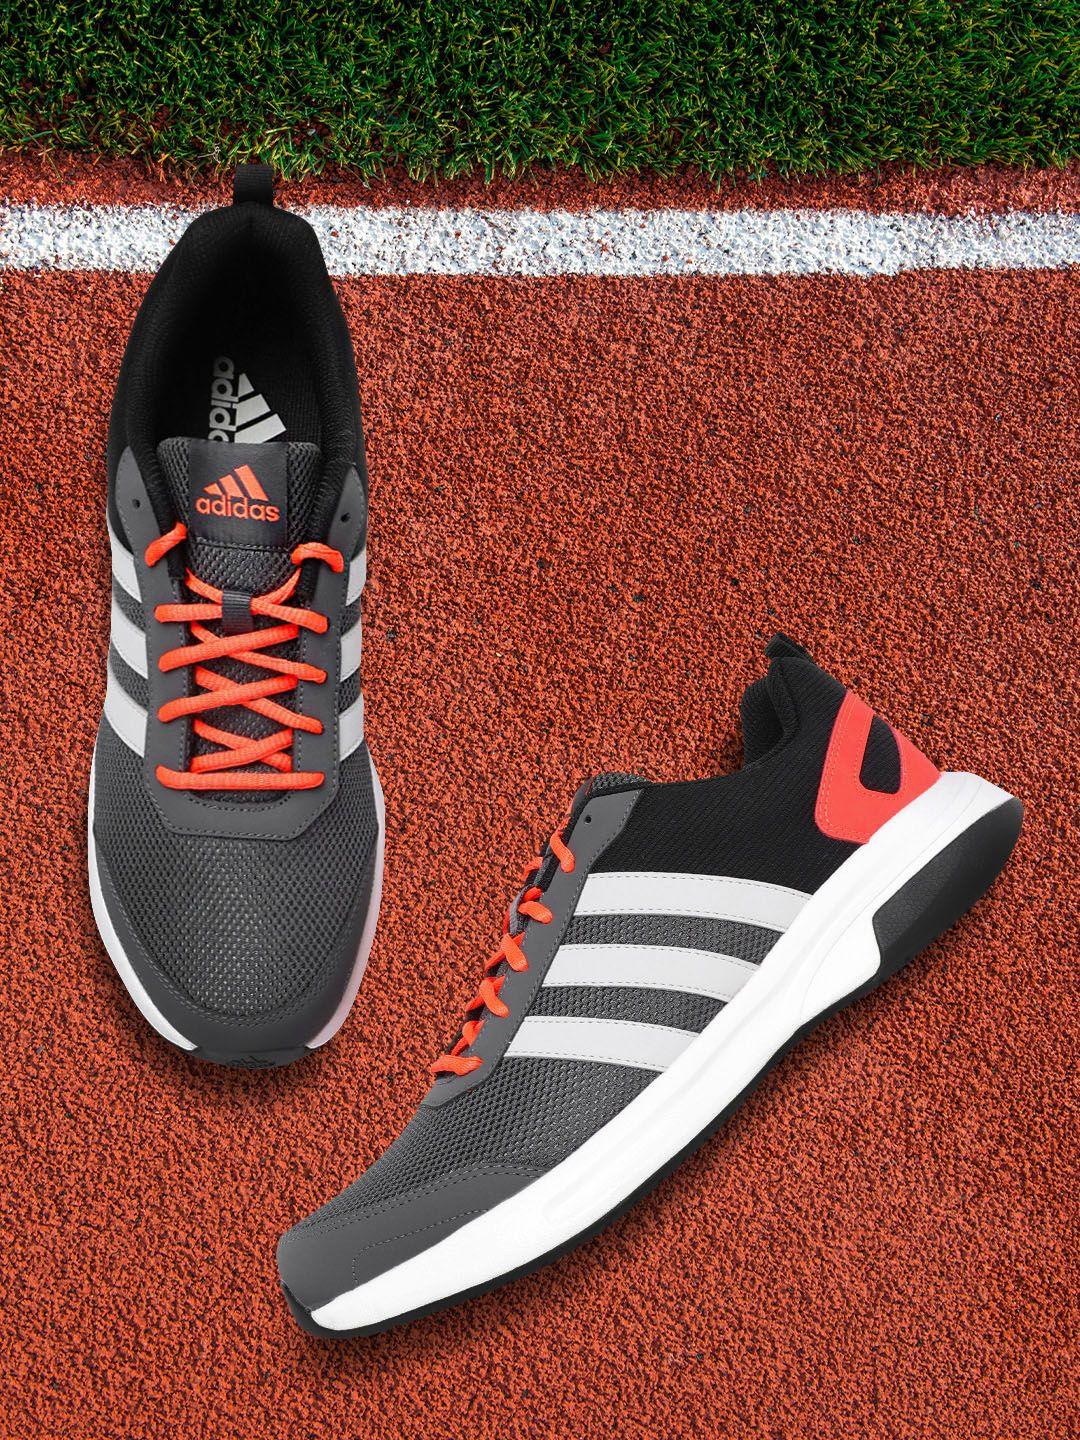 adidas men charcoal grey woven design adiglide running shoes